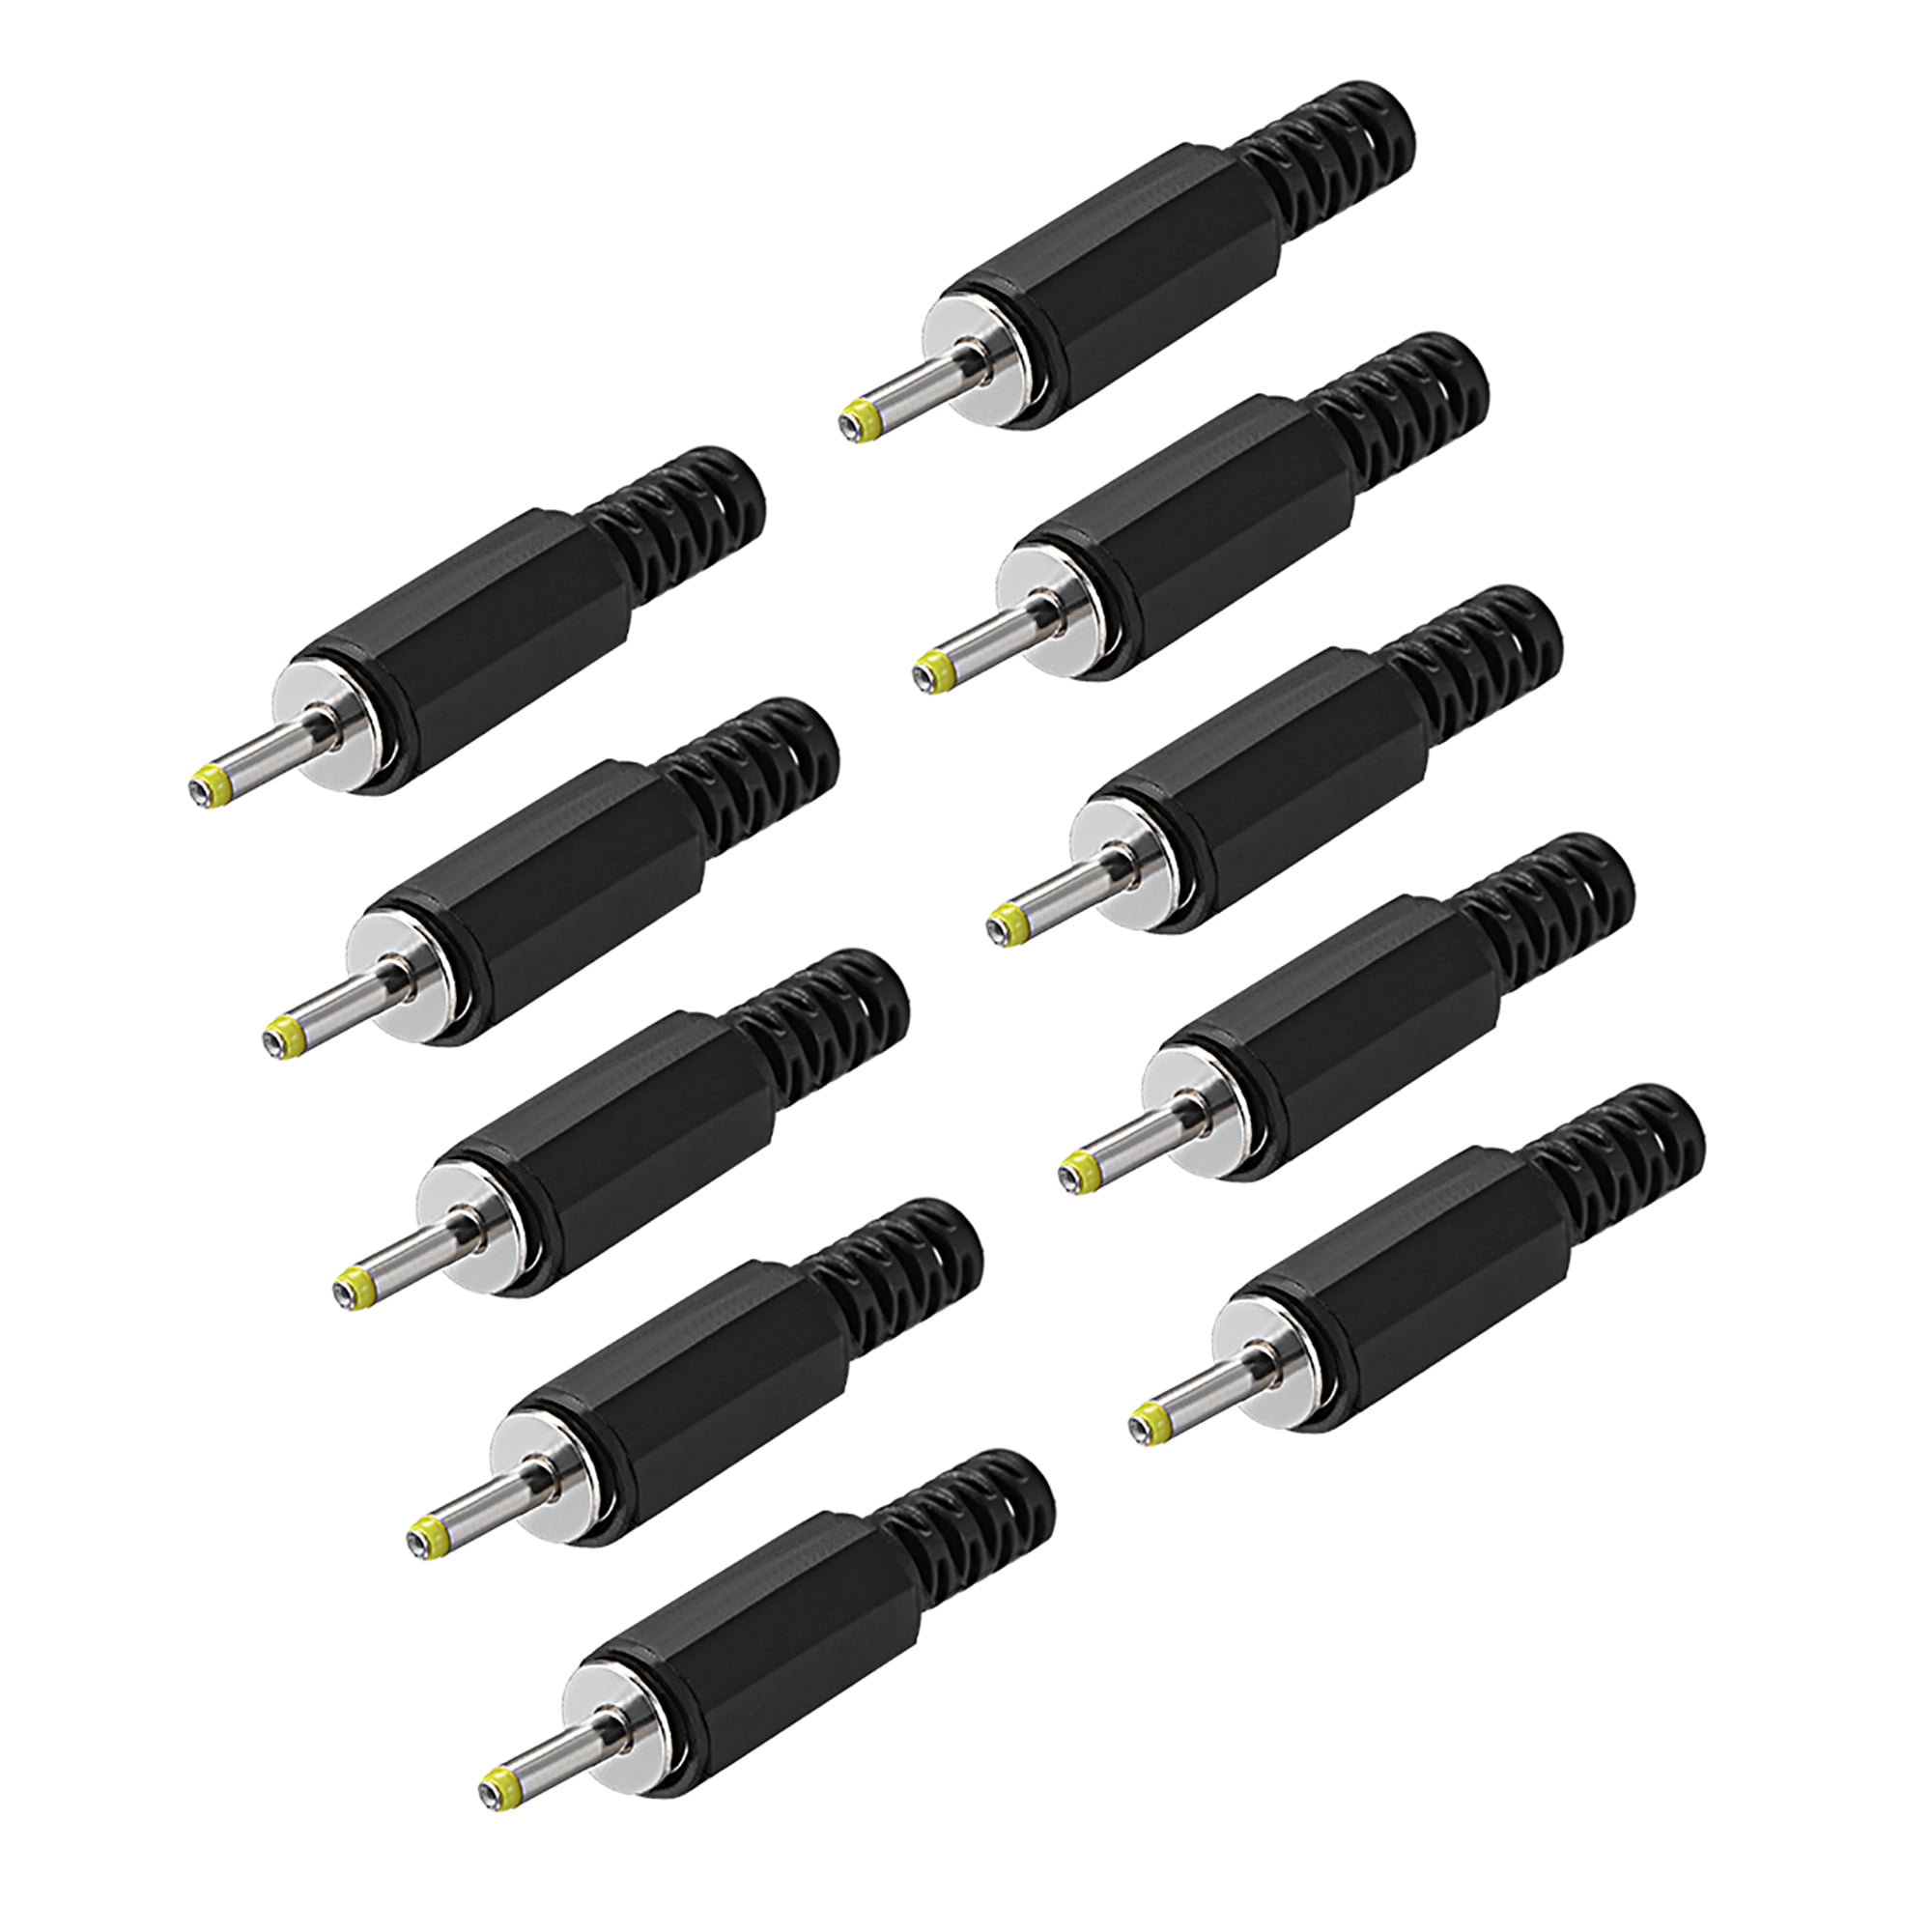 Connectors 1pcs 4FT DC Power Plug Connector 5.5mm x 2.5mm Male L-Shape Cable with Cord Wire Cable Length: 1.2m, Color: Black